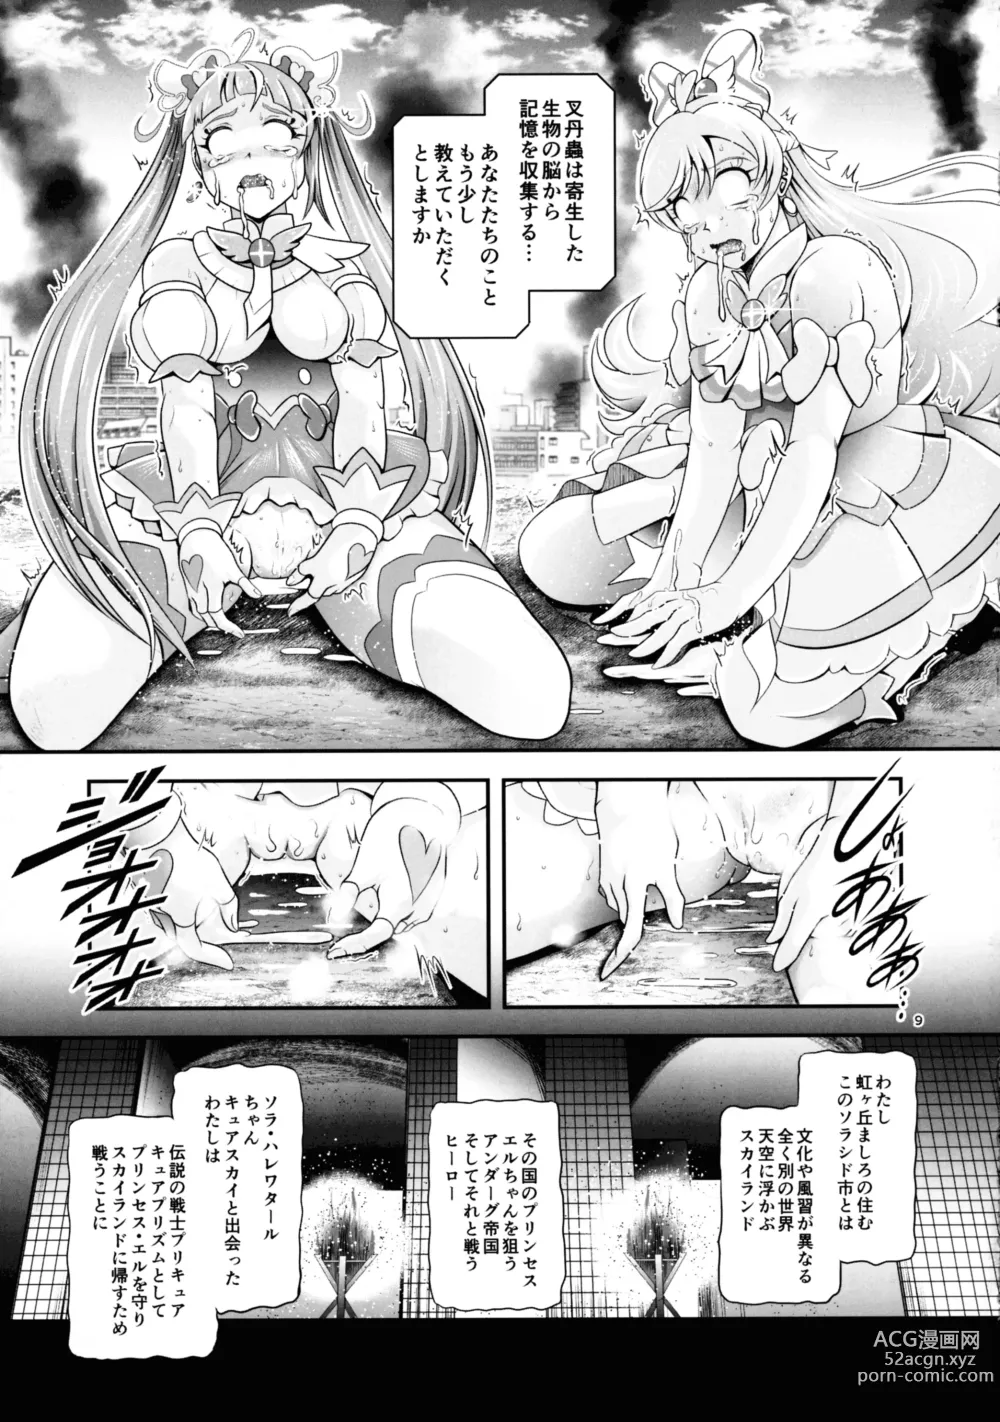 Page 9 of doujinshi Soukyuu BRANDNEW SKY